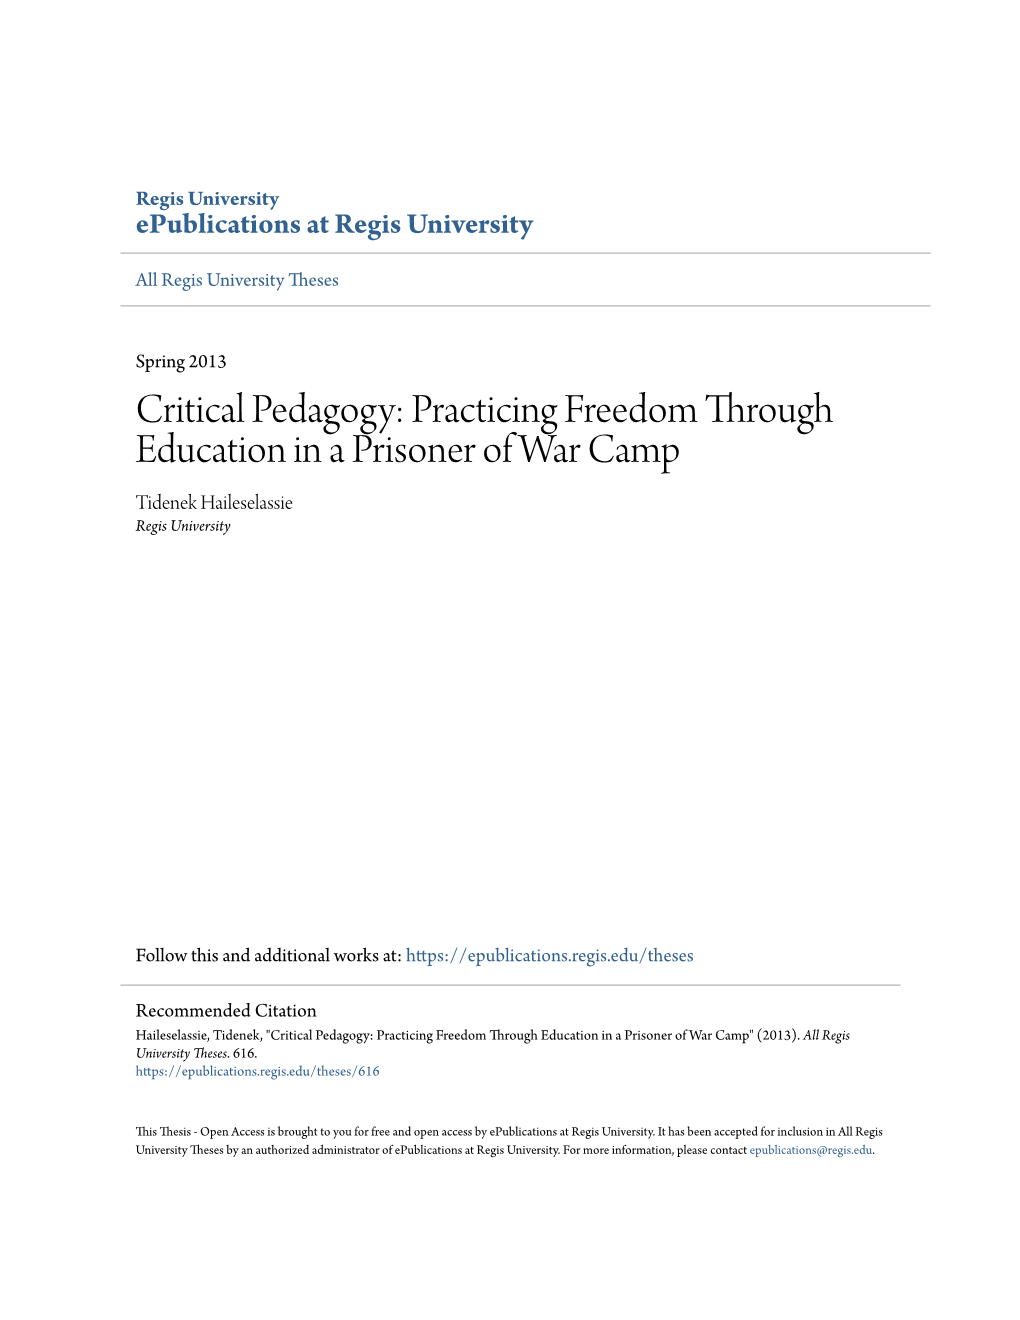 Critical Pedagogy: Practicing Freedom Through Education in a Prisoner of War Camp Tidenek Haileselassie Regis University